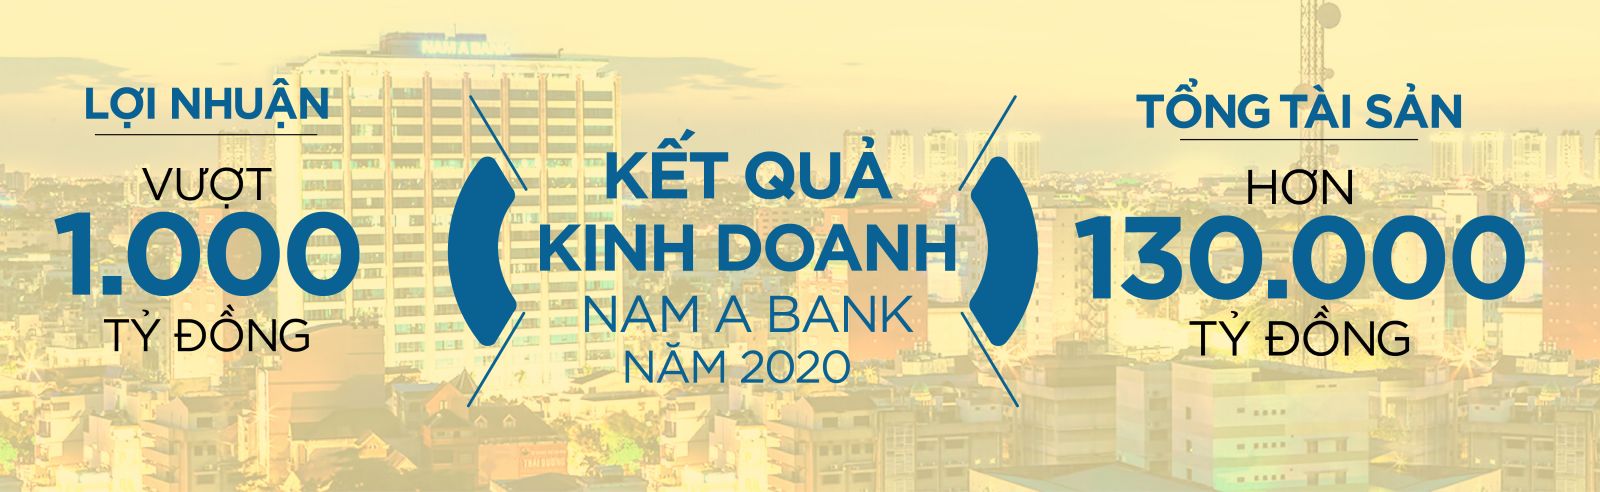 Kết quả kinh doanh Nam A Bank năm 2020